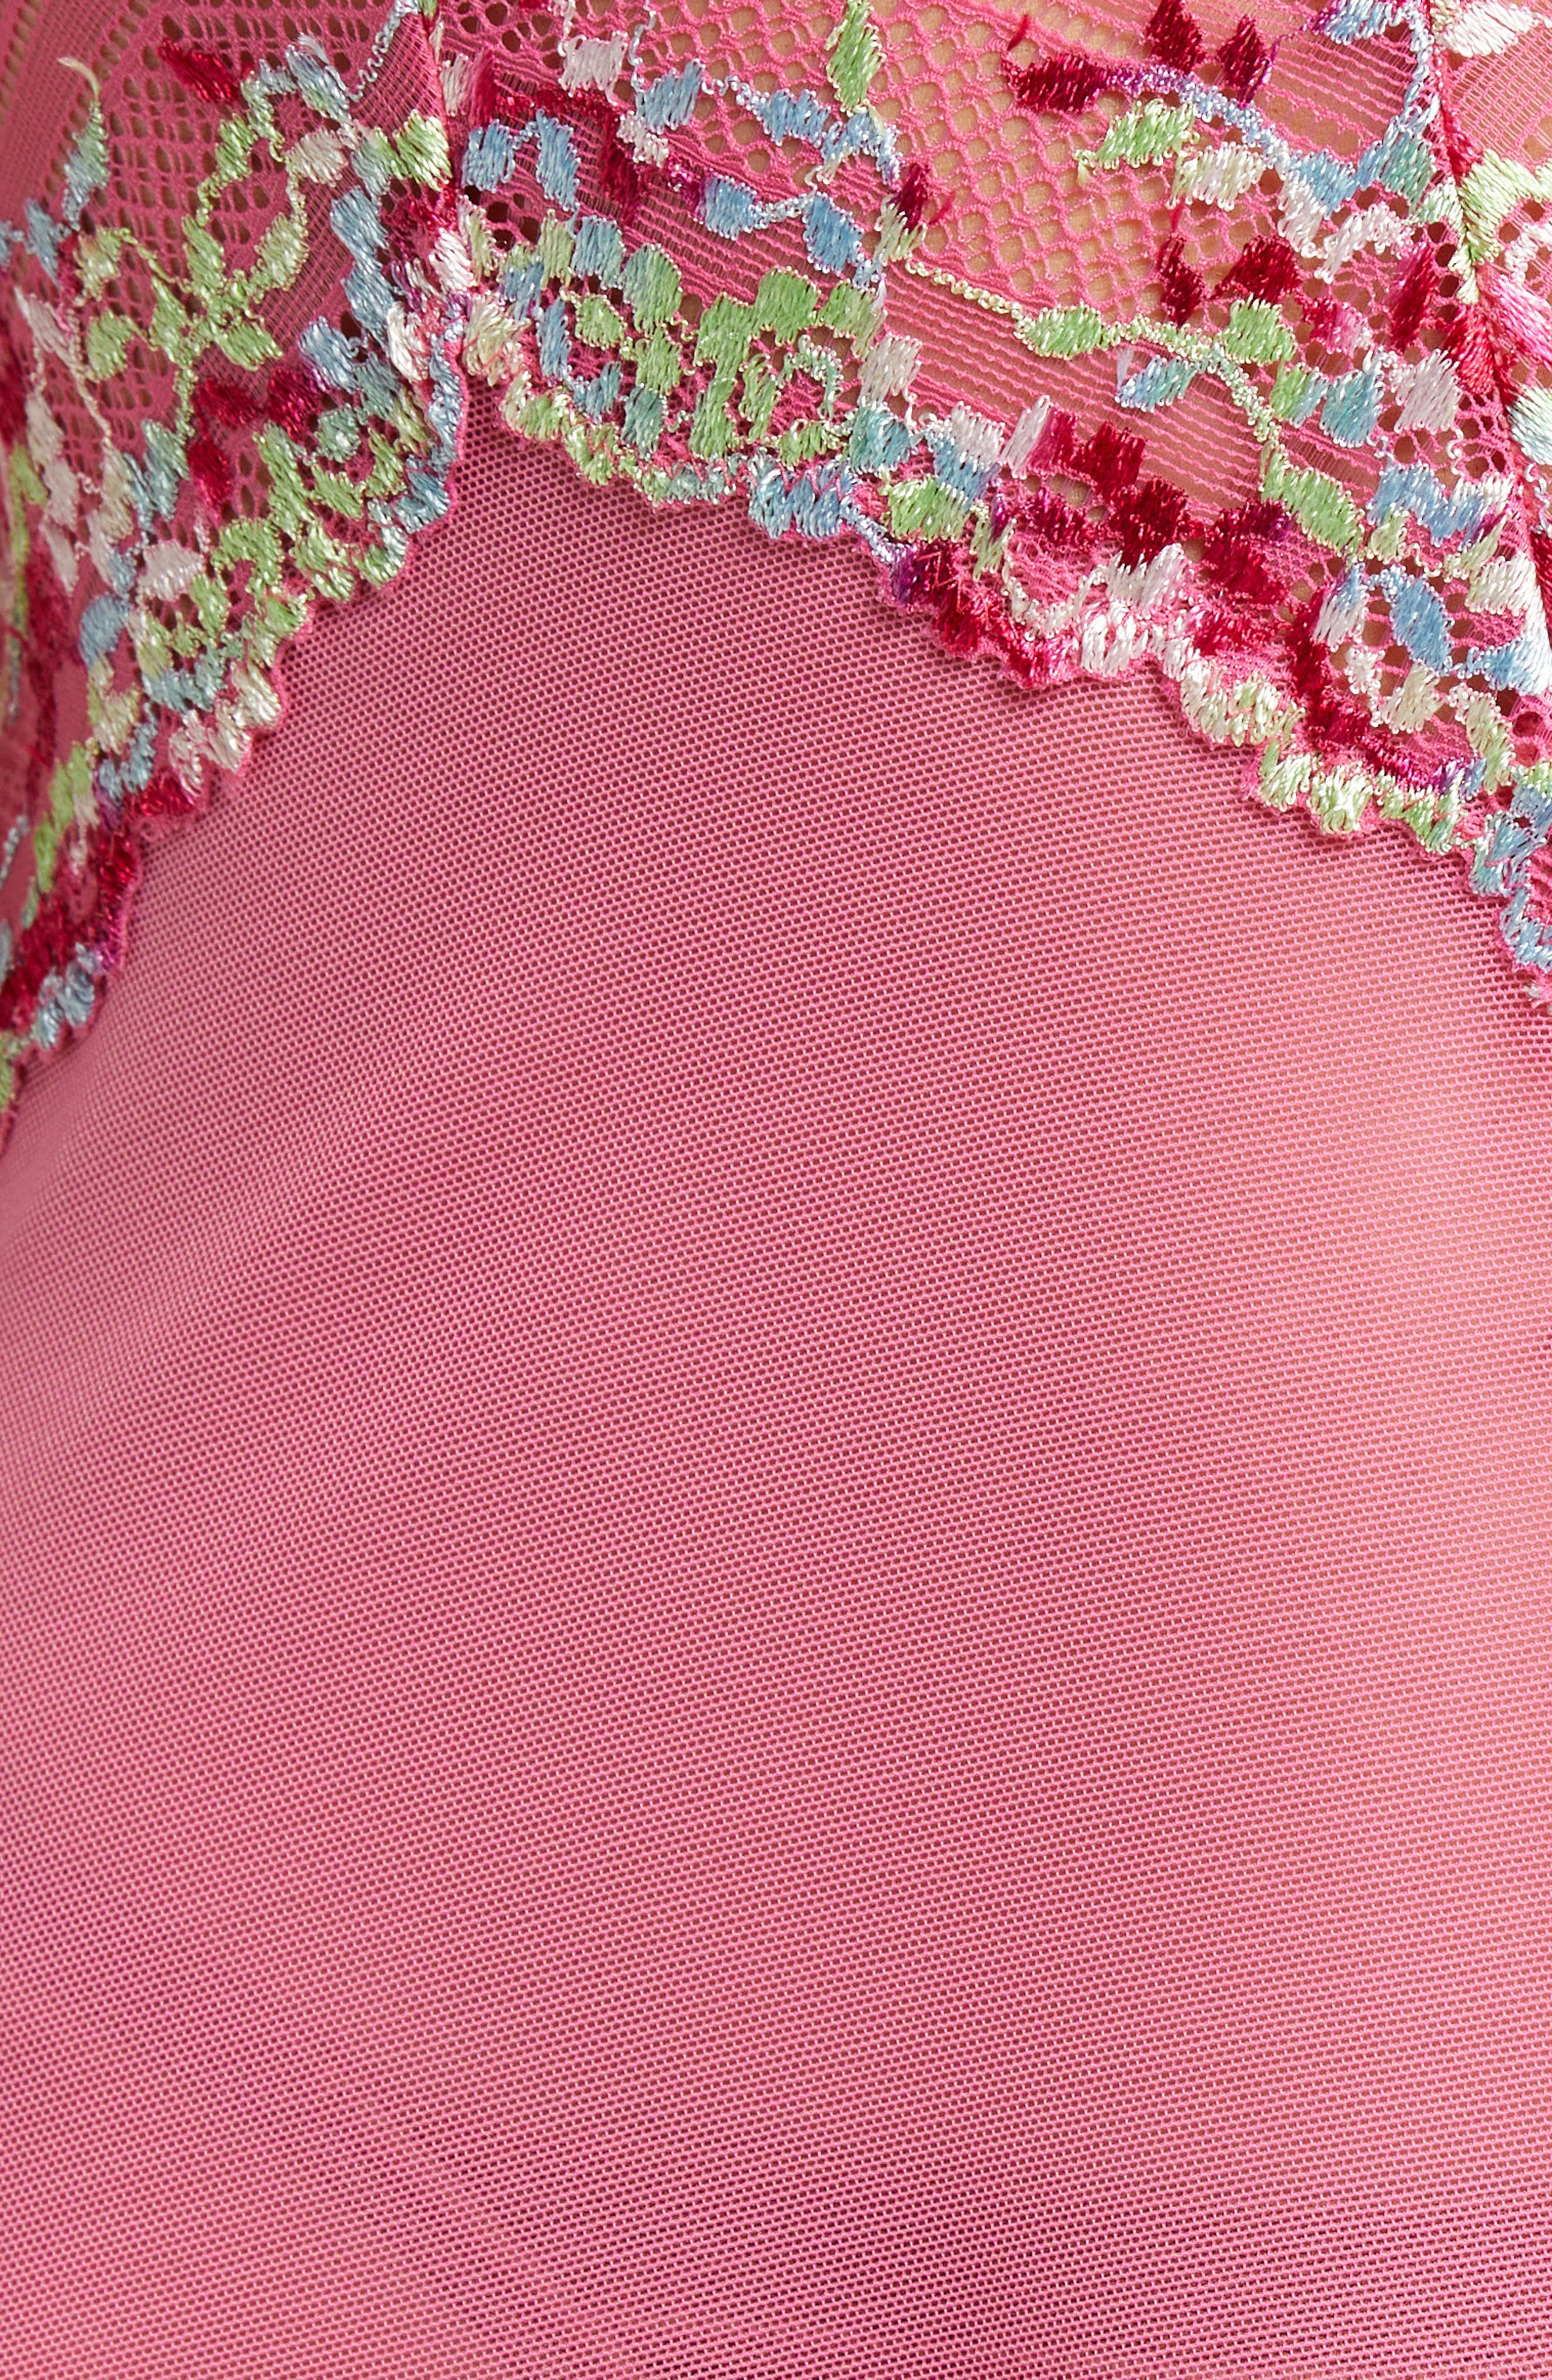 814191 Wacoal Embrace Lace Chemise - 814191 Hot Pink/Multi